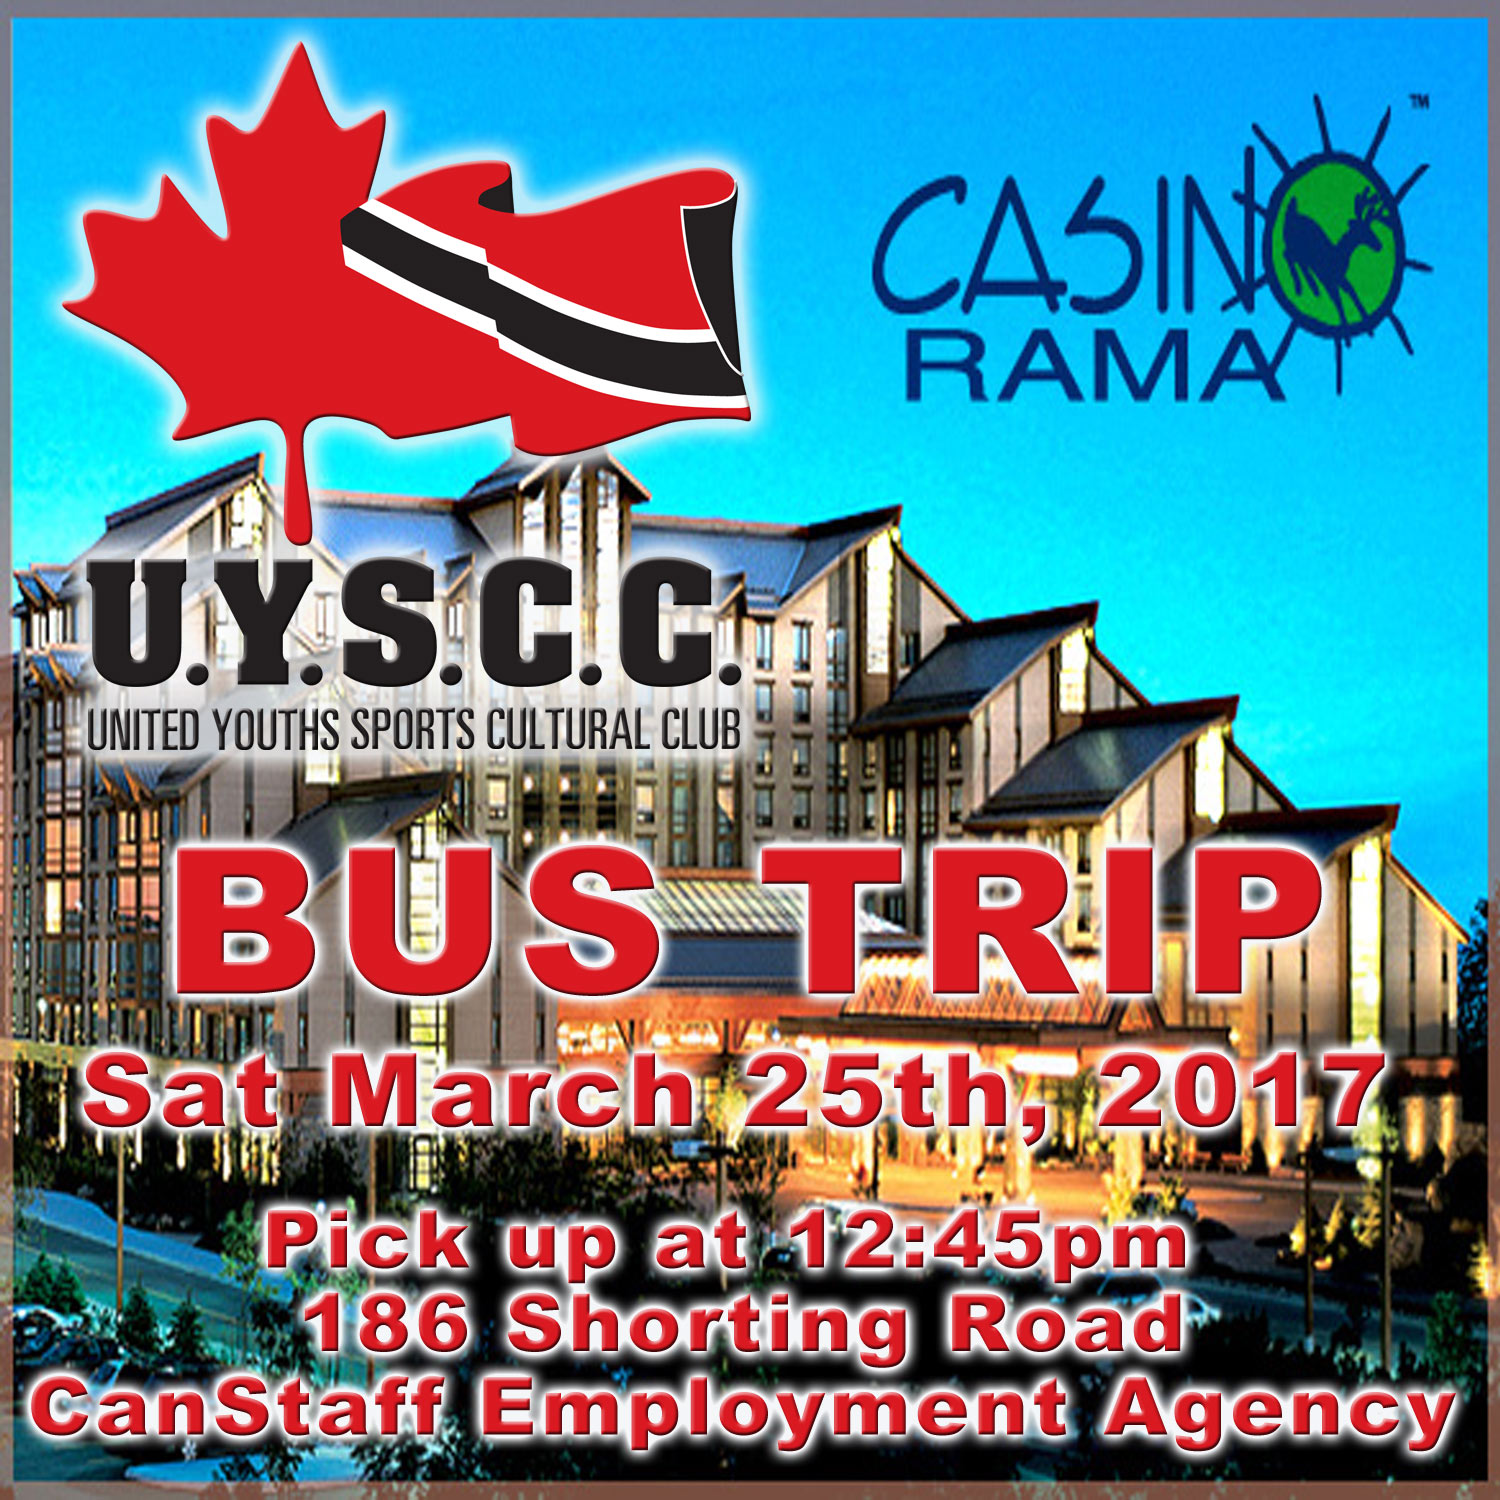 barona casino bus schedule in san diego